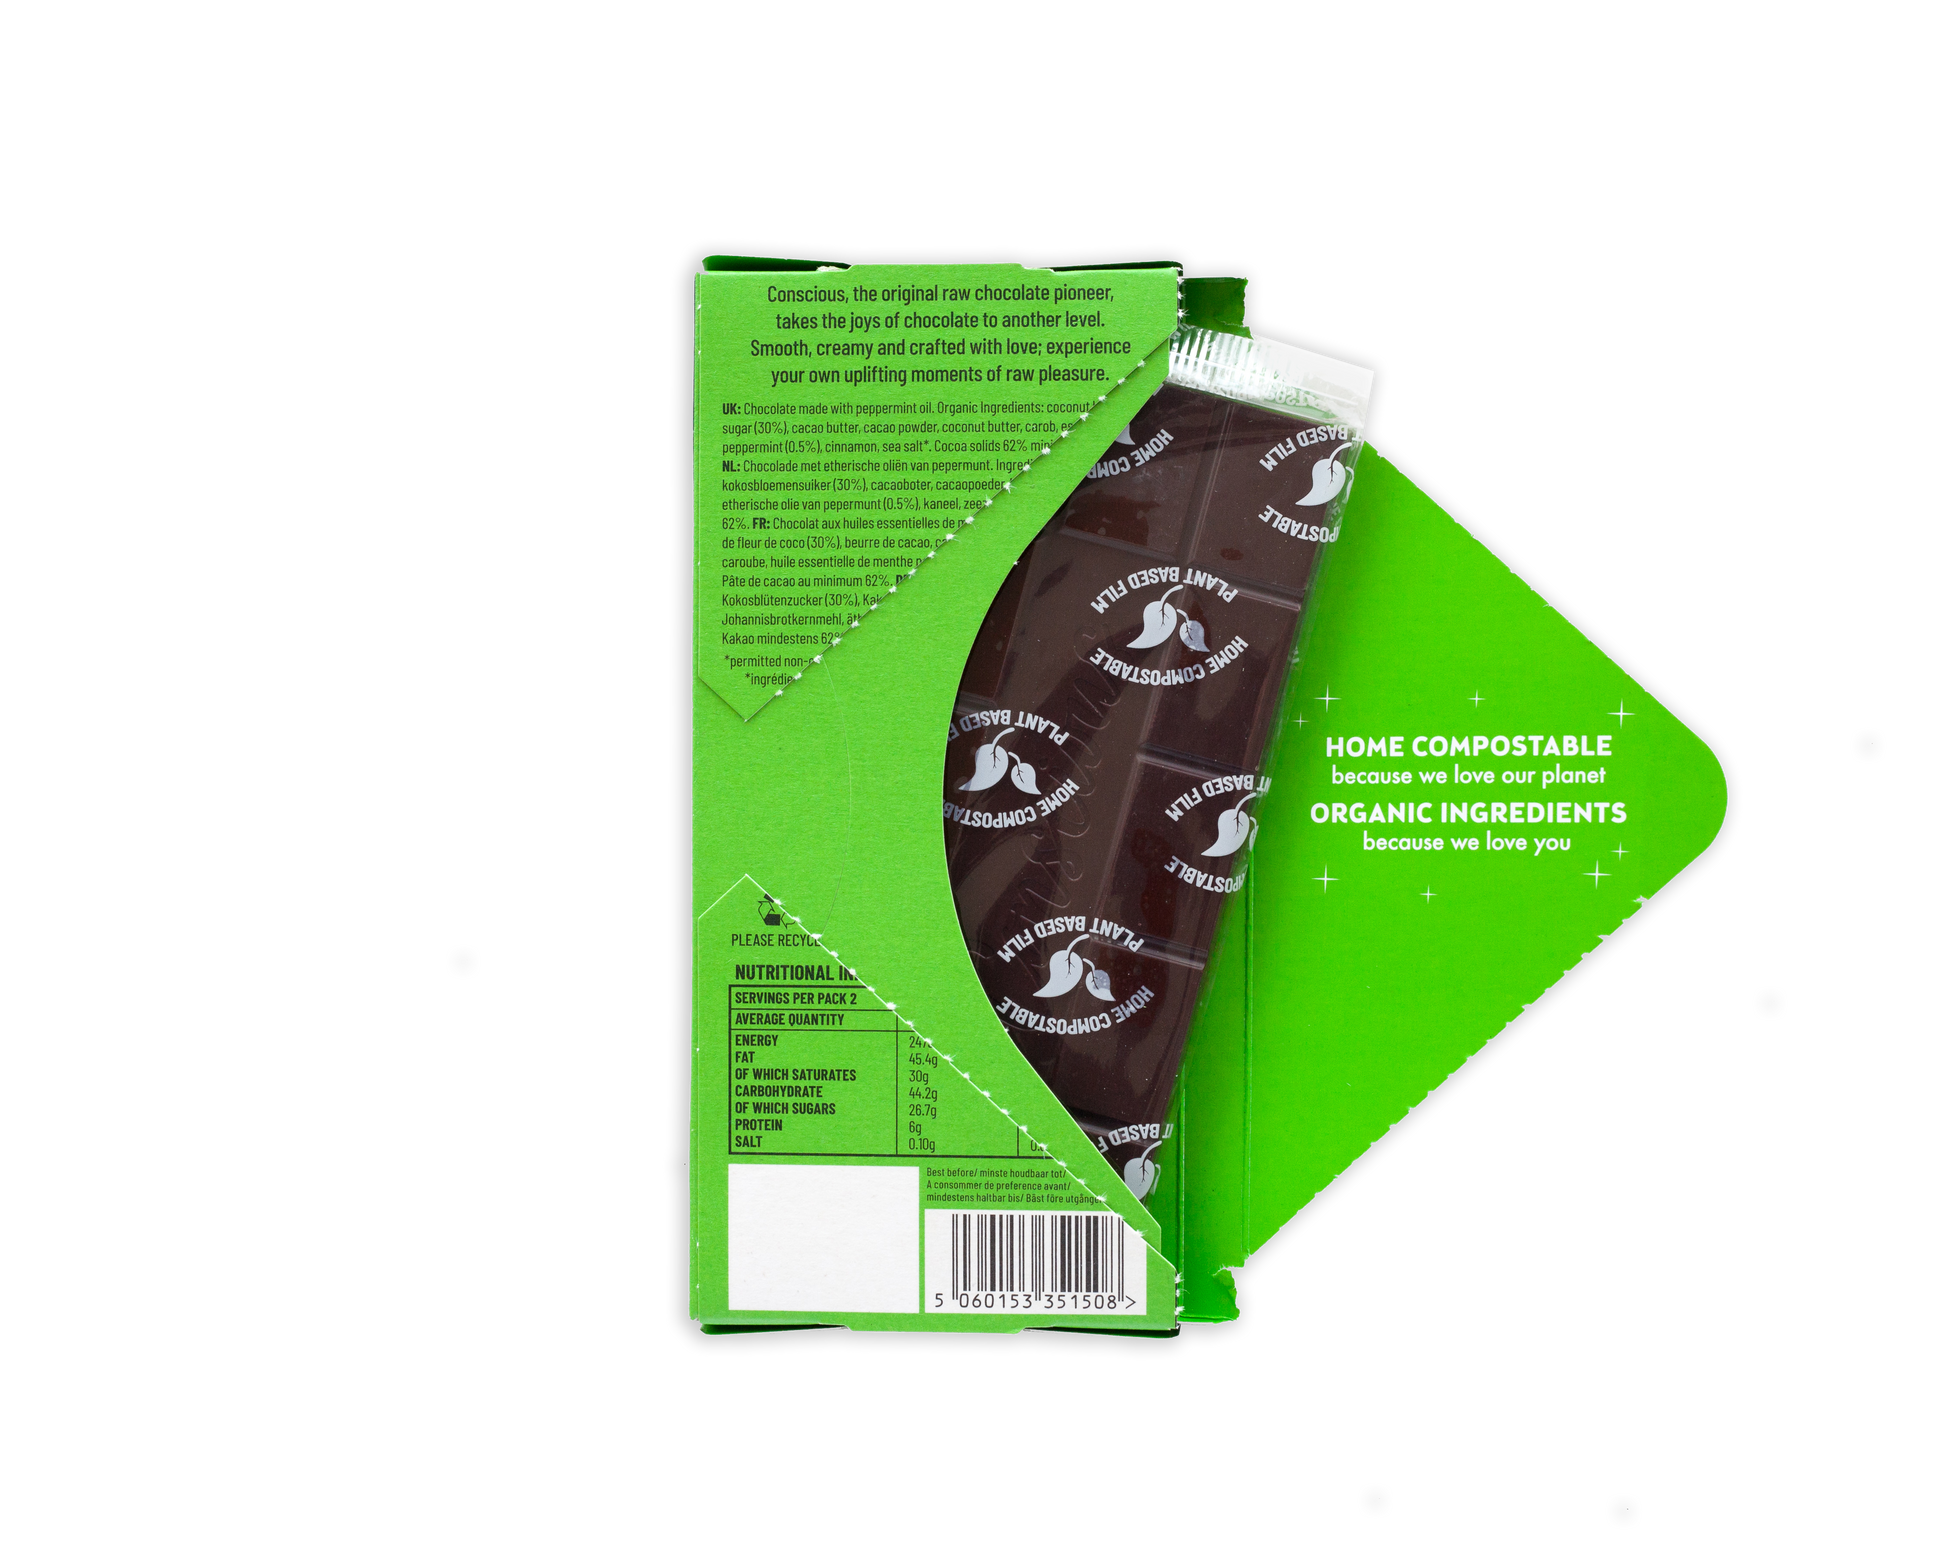 Peppermint 60g - Conscious Chocolate